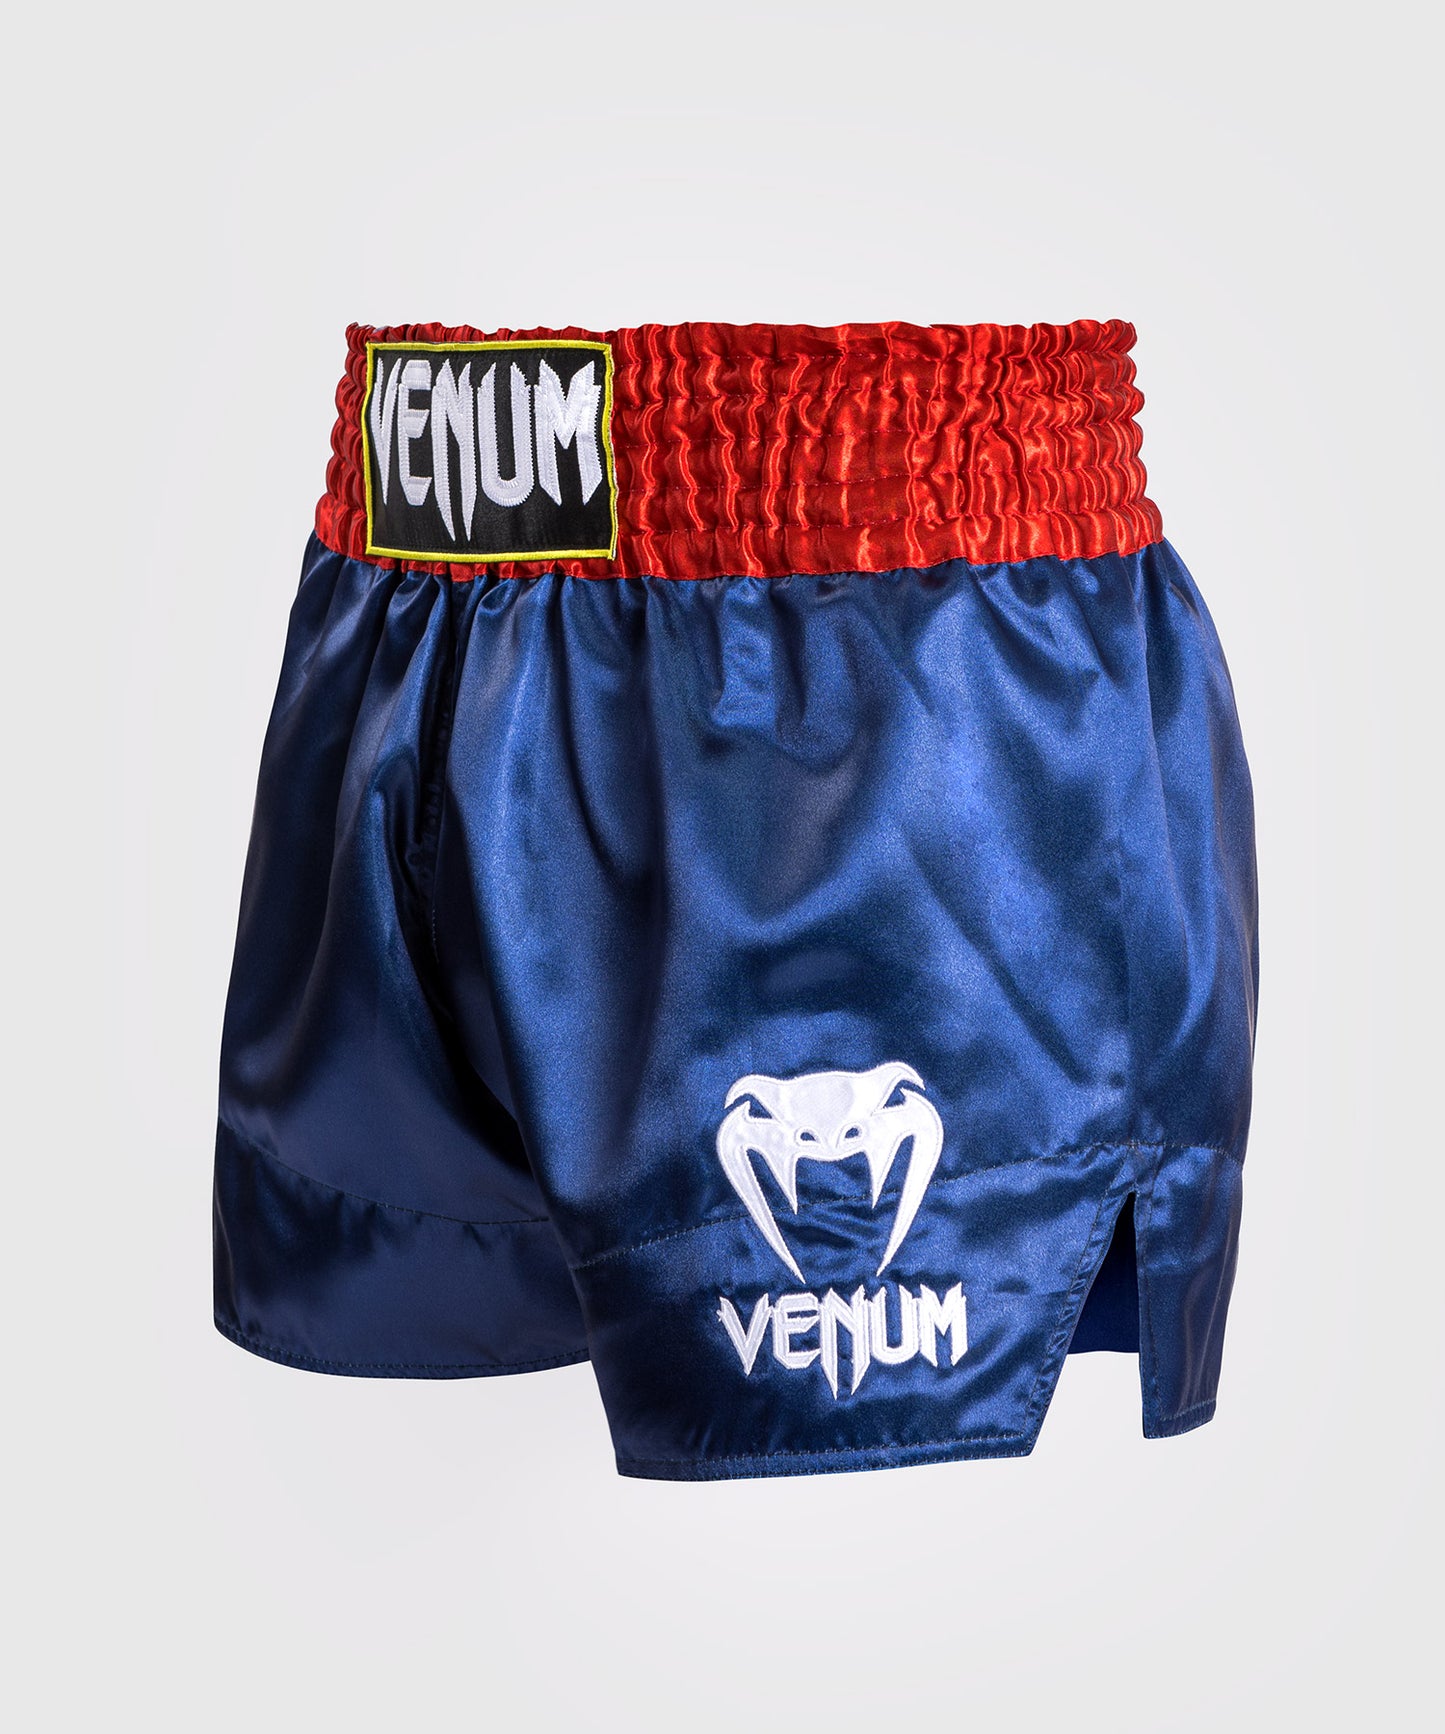 Venum Klassiek - Muay Thai-short - Blauw/Rood/Wit